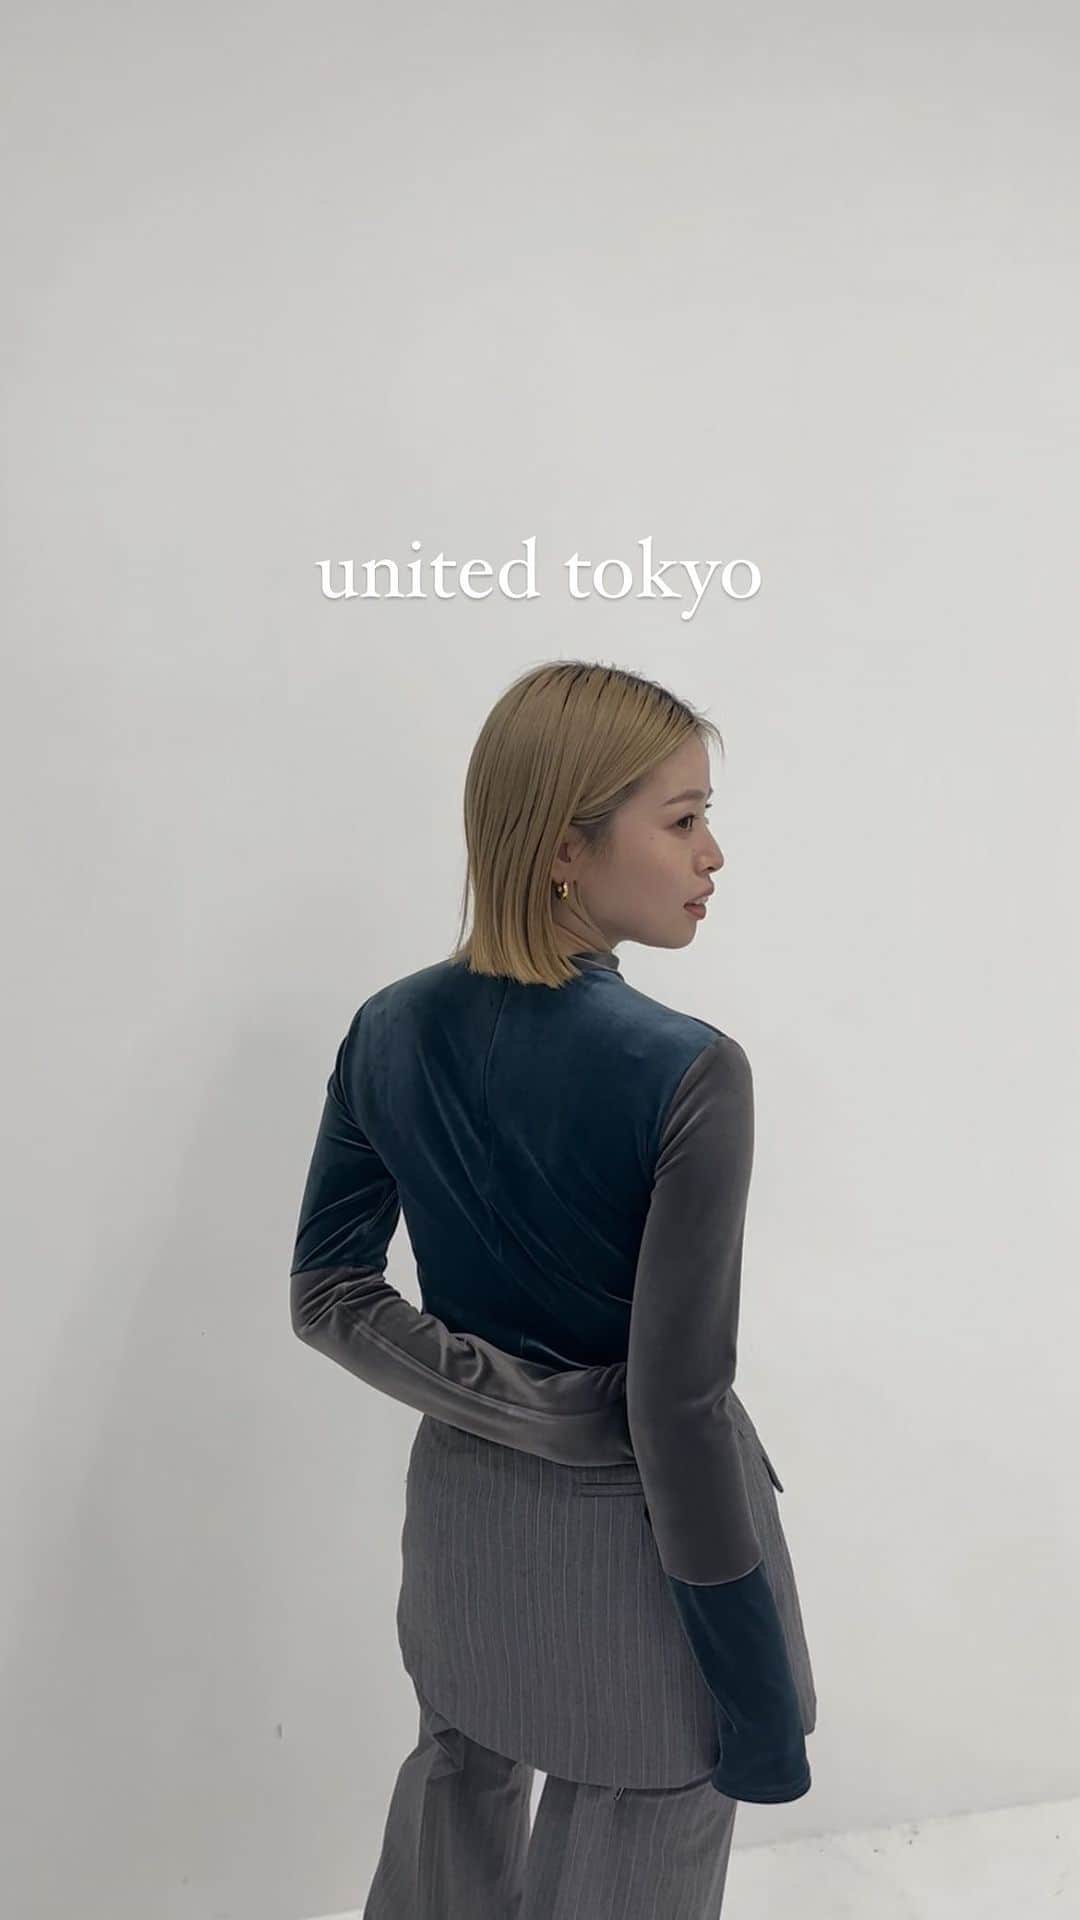 united tokyoのインスタグラム